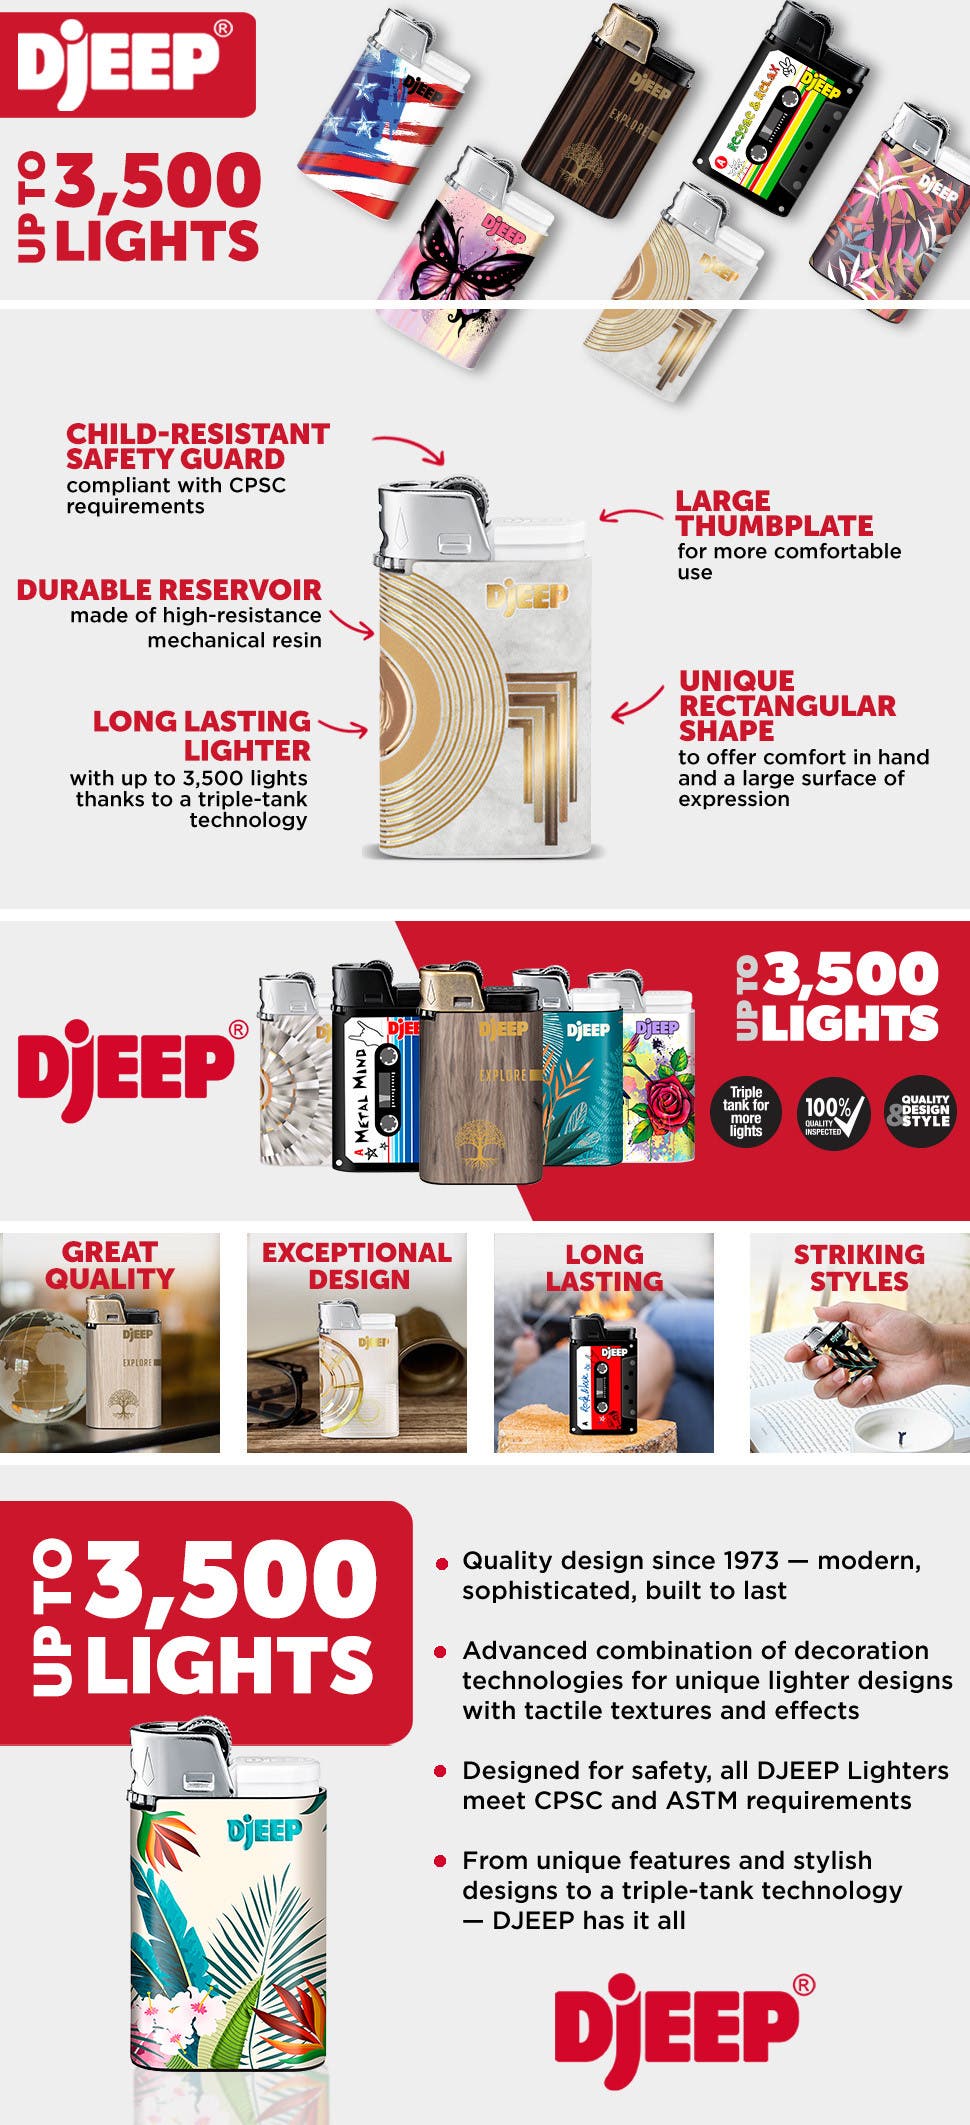 DJEEP Lighters up to 3500 lights